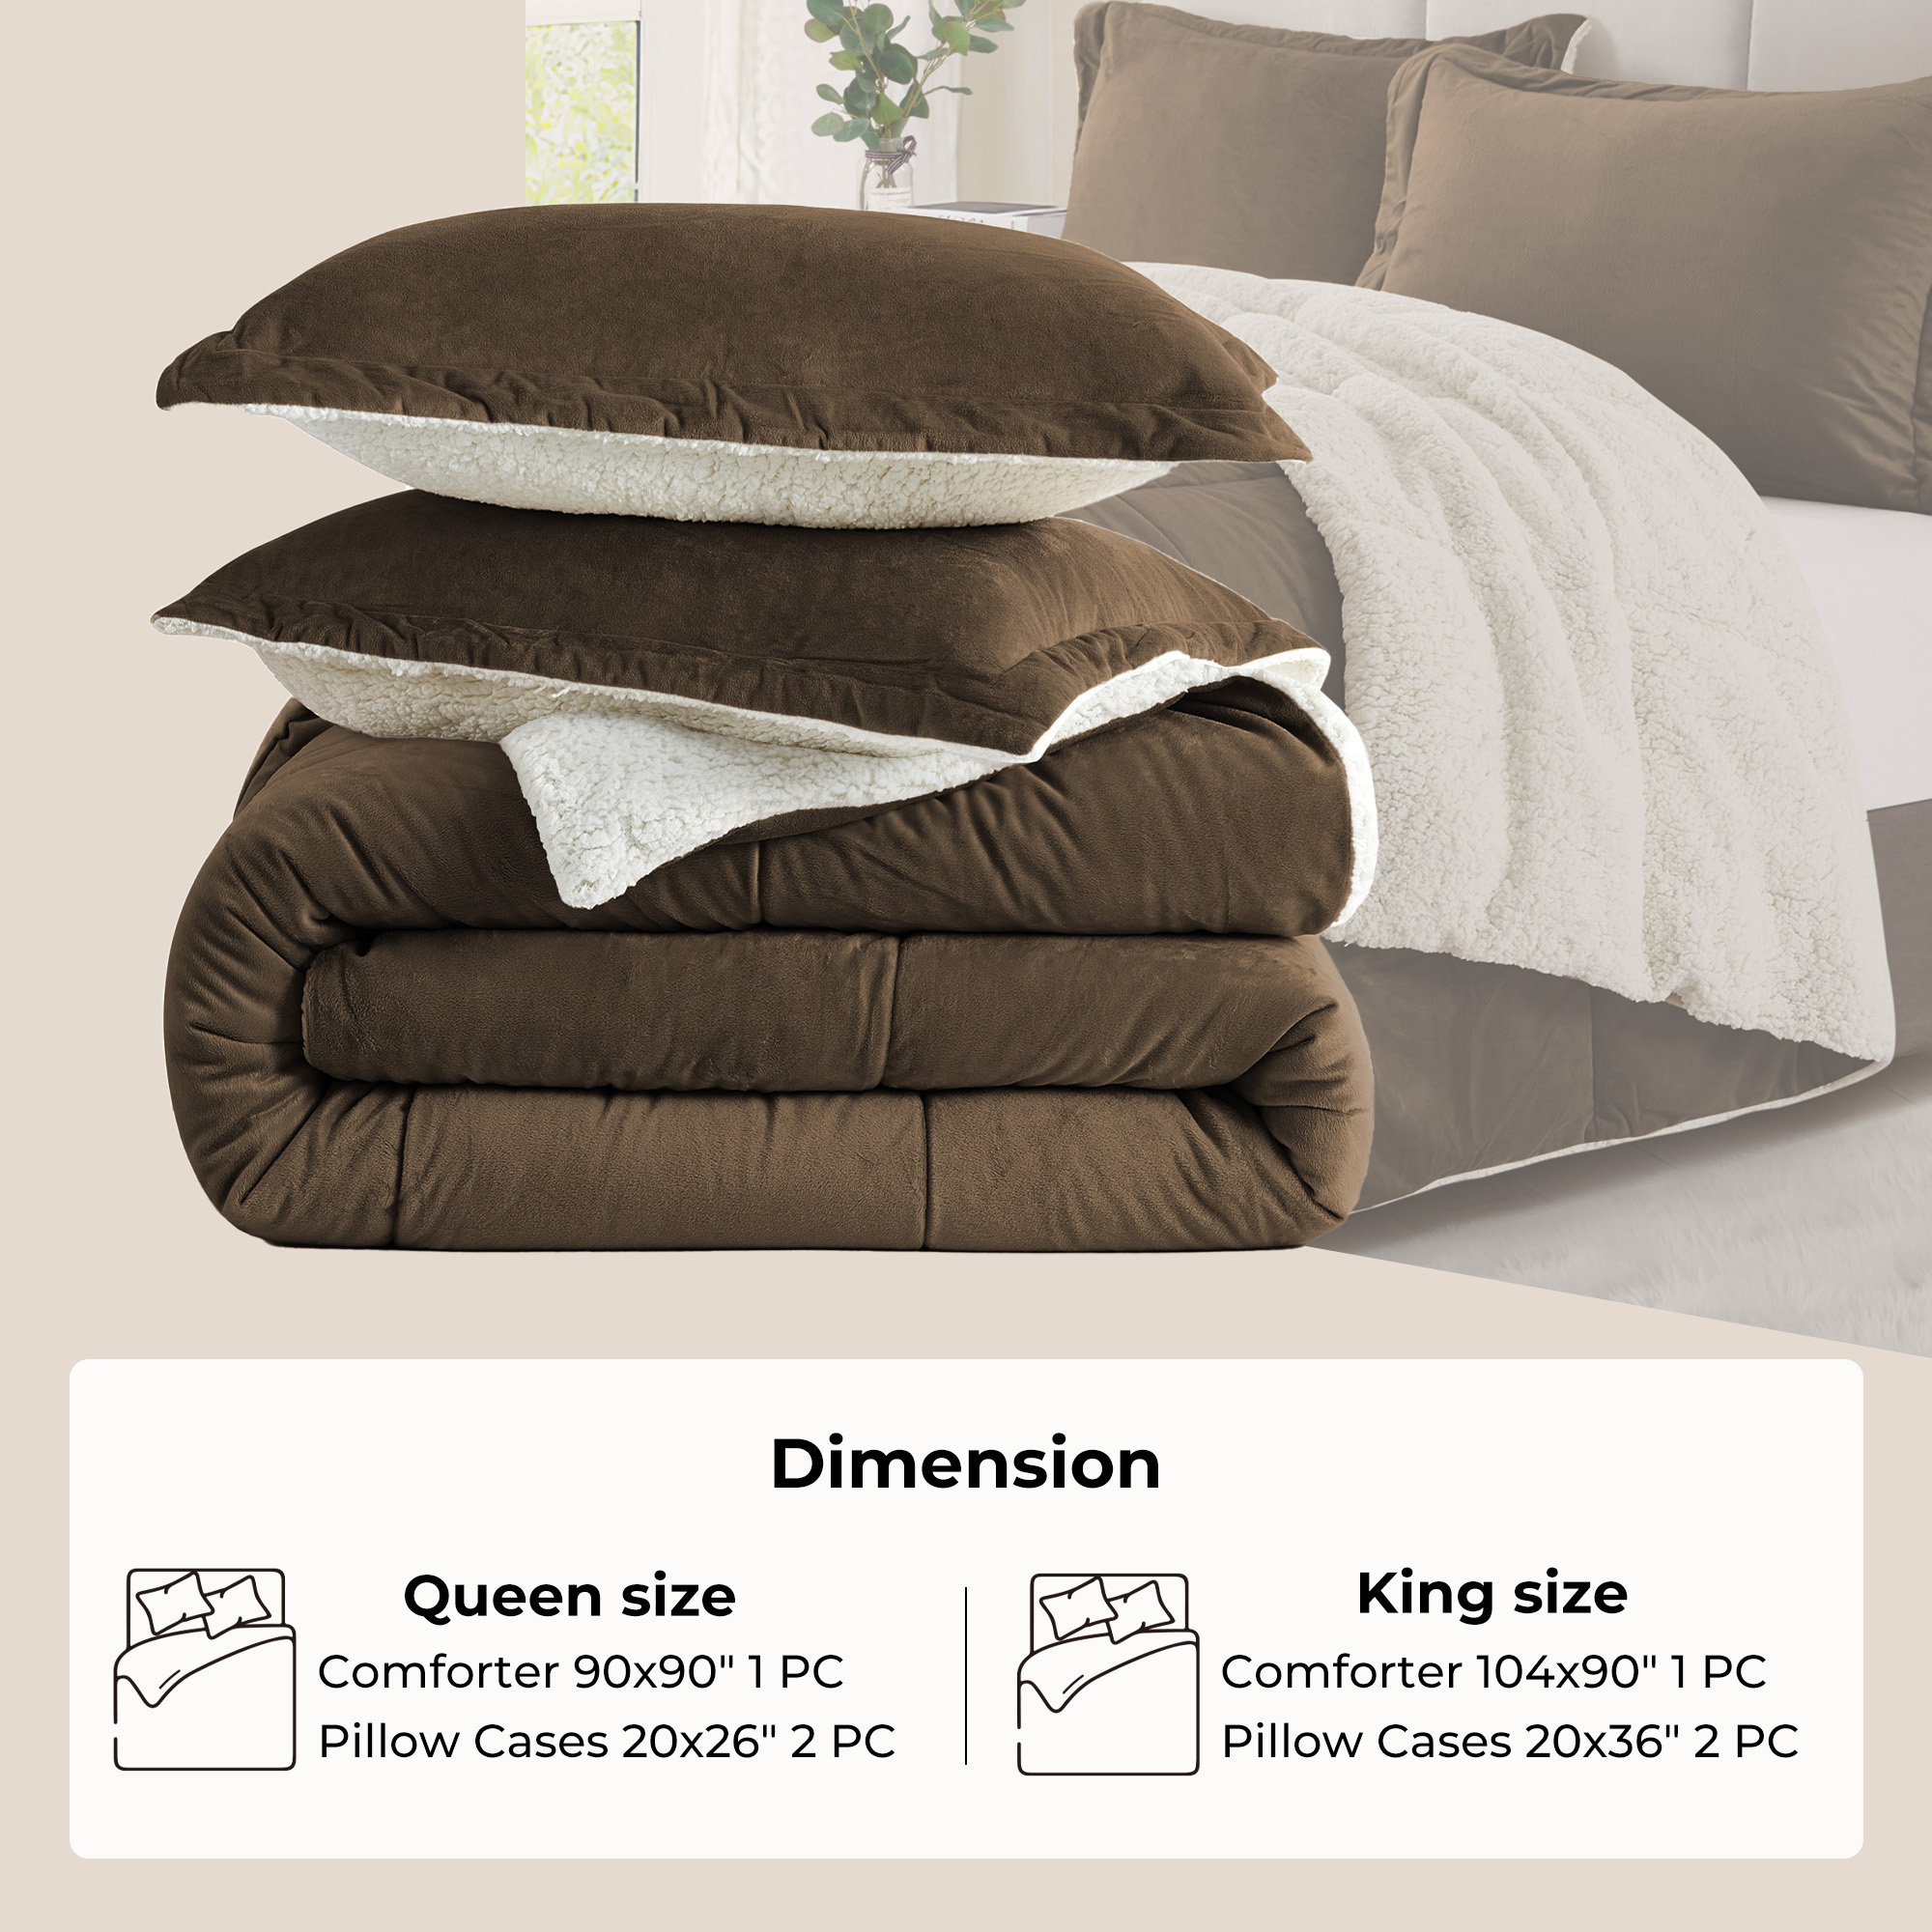 3-Piece Sherpa Reversible Down Alternative Winter Comforter Set - Chocolate / Medium Weight, Queen